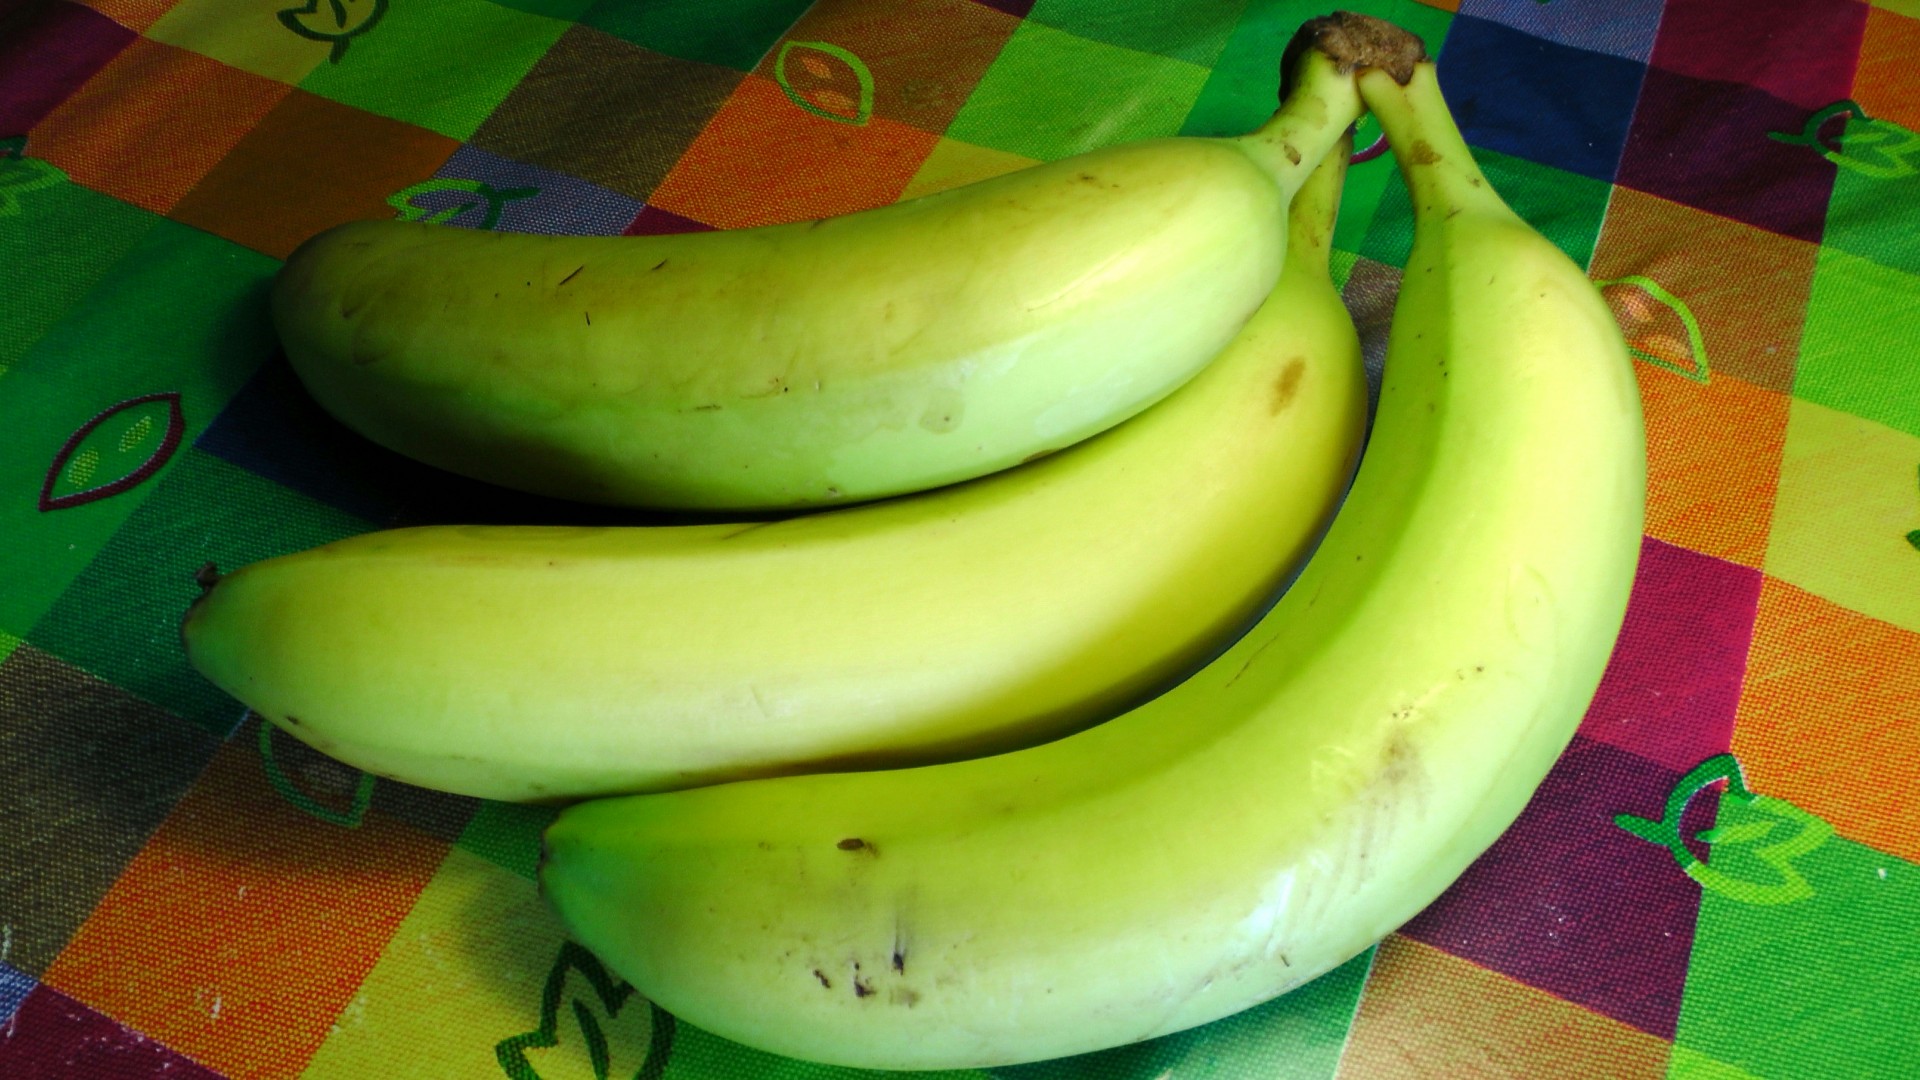 Bananai & Nbsp,  Iš & Nbsp,  Rinkos,  Bananai,  Bananas,  Krūva & Nbsp,  Bananai,  Vaisiai,  Vaisiai,  Vaisiai & Nbsp